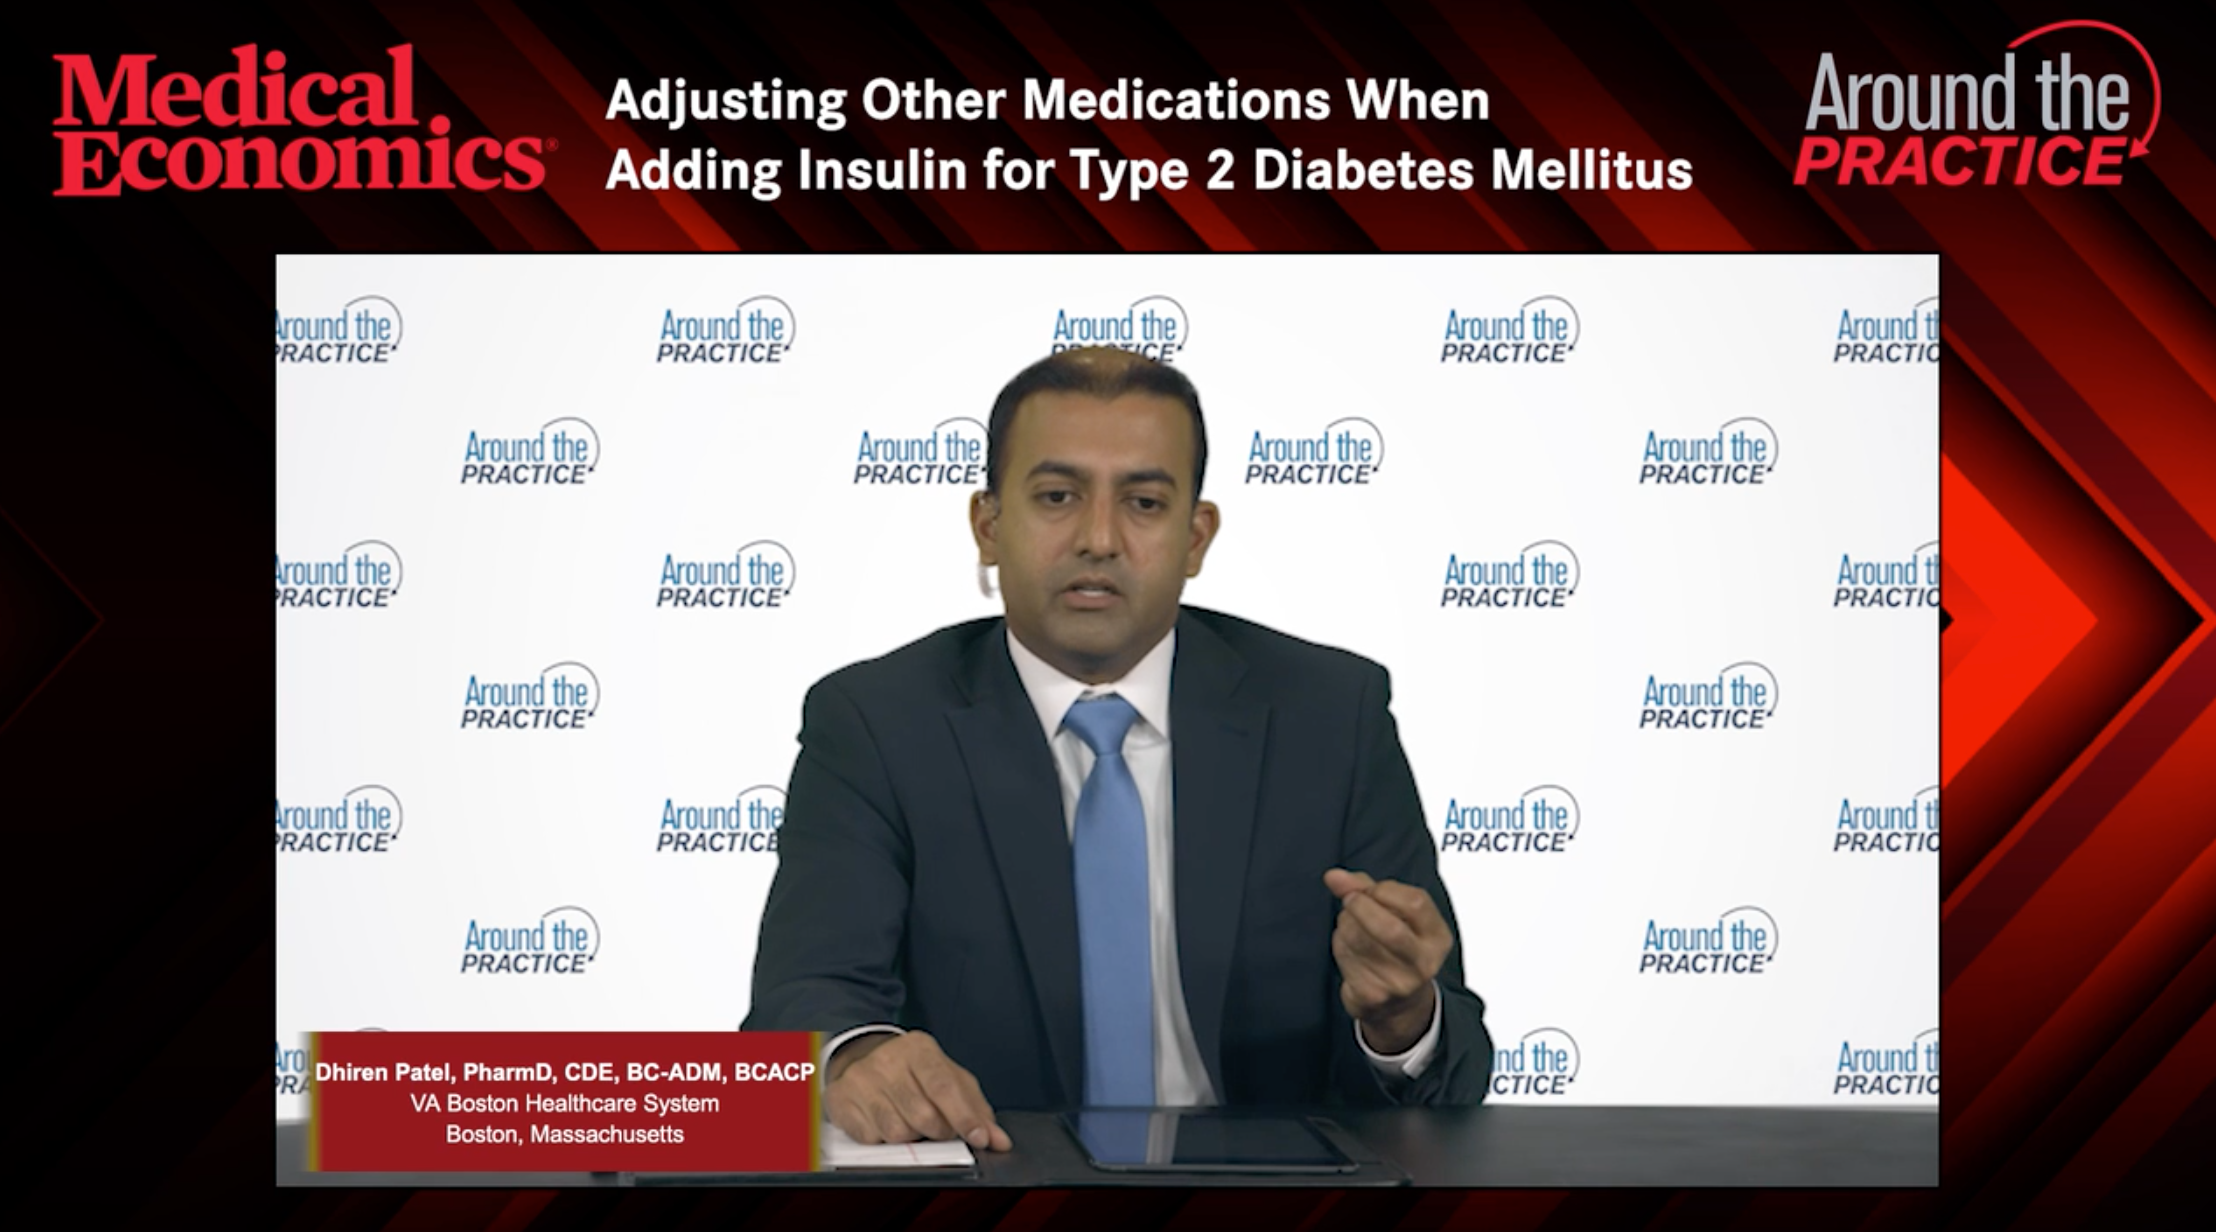 Benefits of an Insulin Pump for Type 2 Diabetes Mellitus